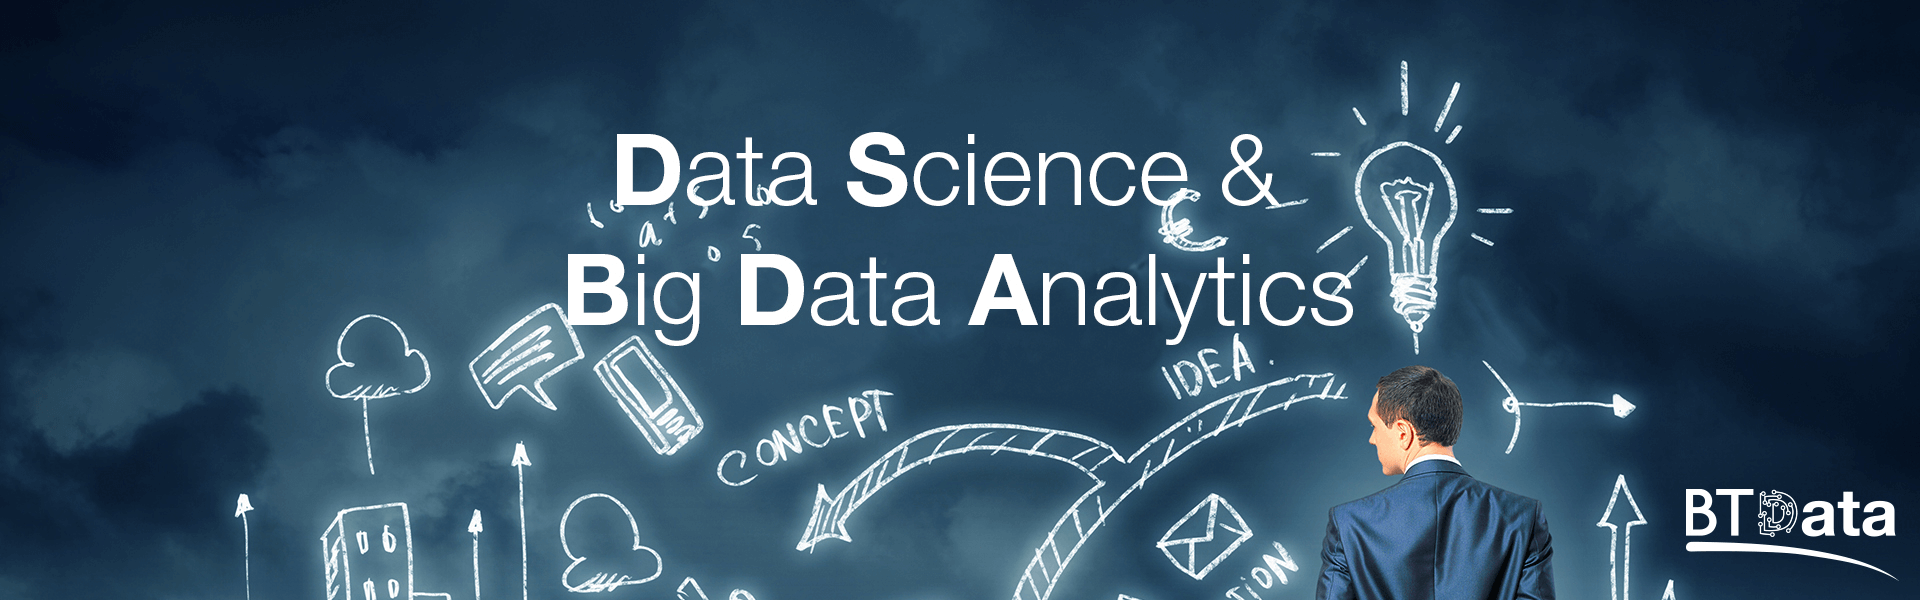 Data poster. Data Science. Data Science картинки. Аватарка data Science. Аналитик big data.